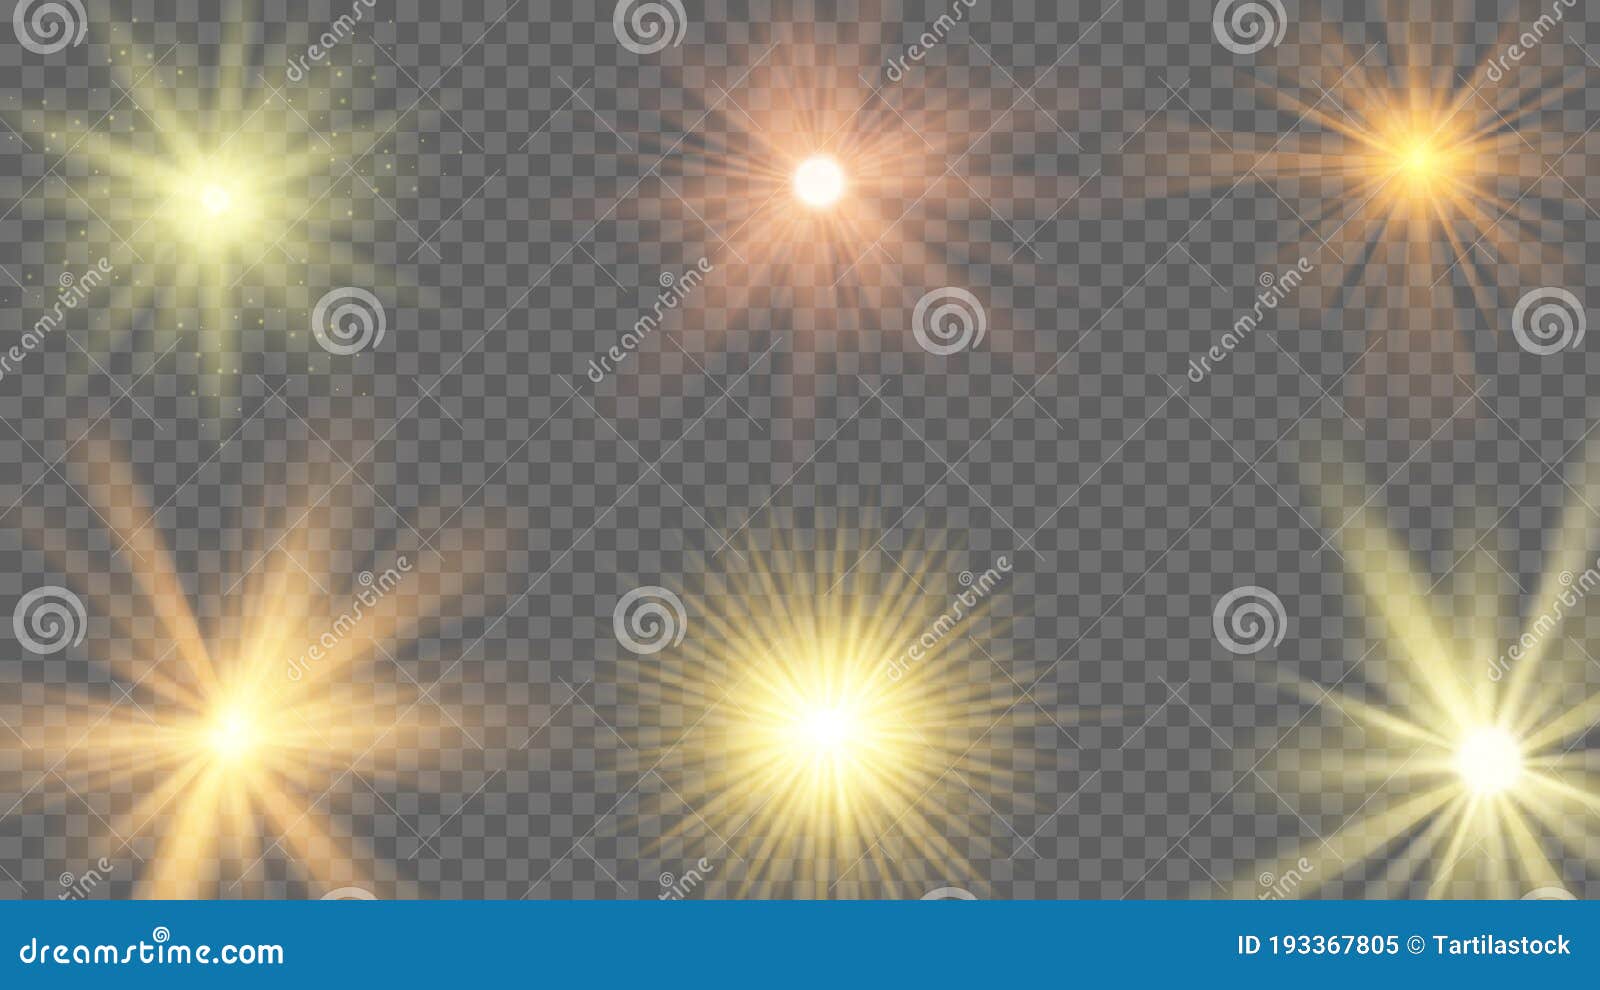 sun ray effect. starburst yellow shine, sunlight radiance on transparent background. sunshine beams, summer heat sunbeam